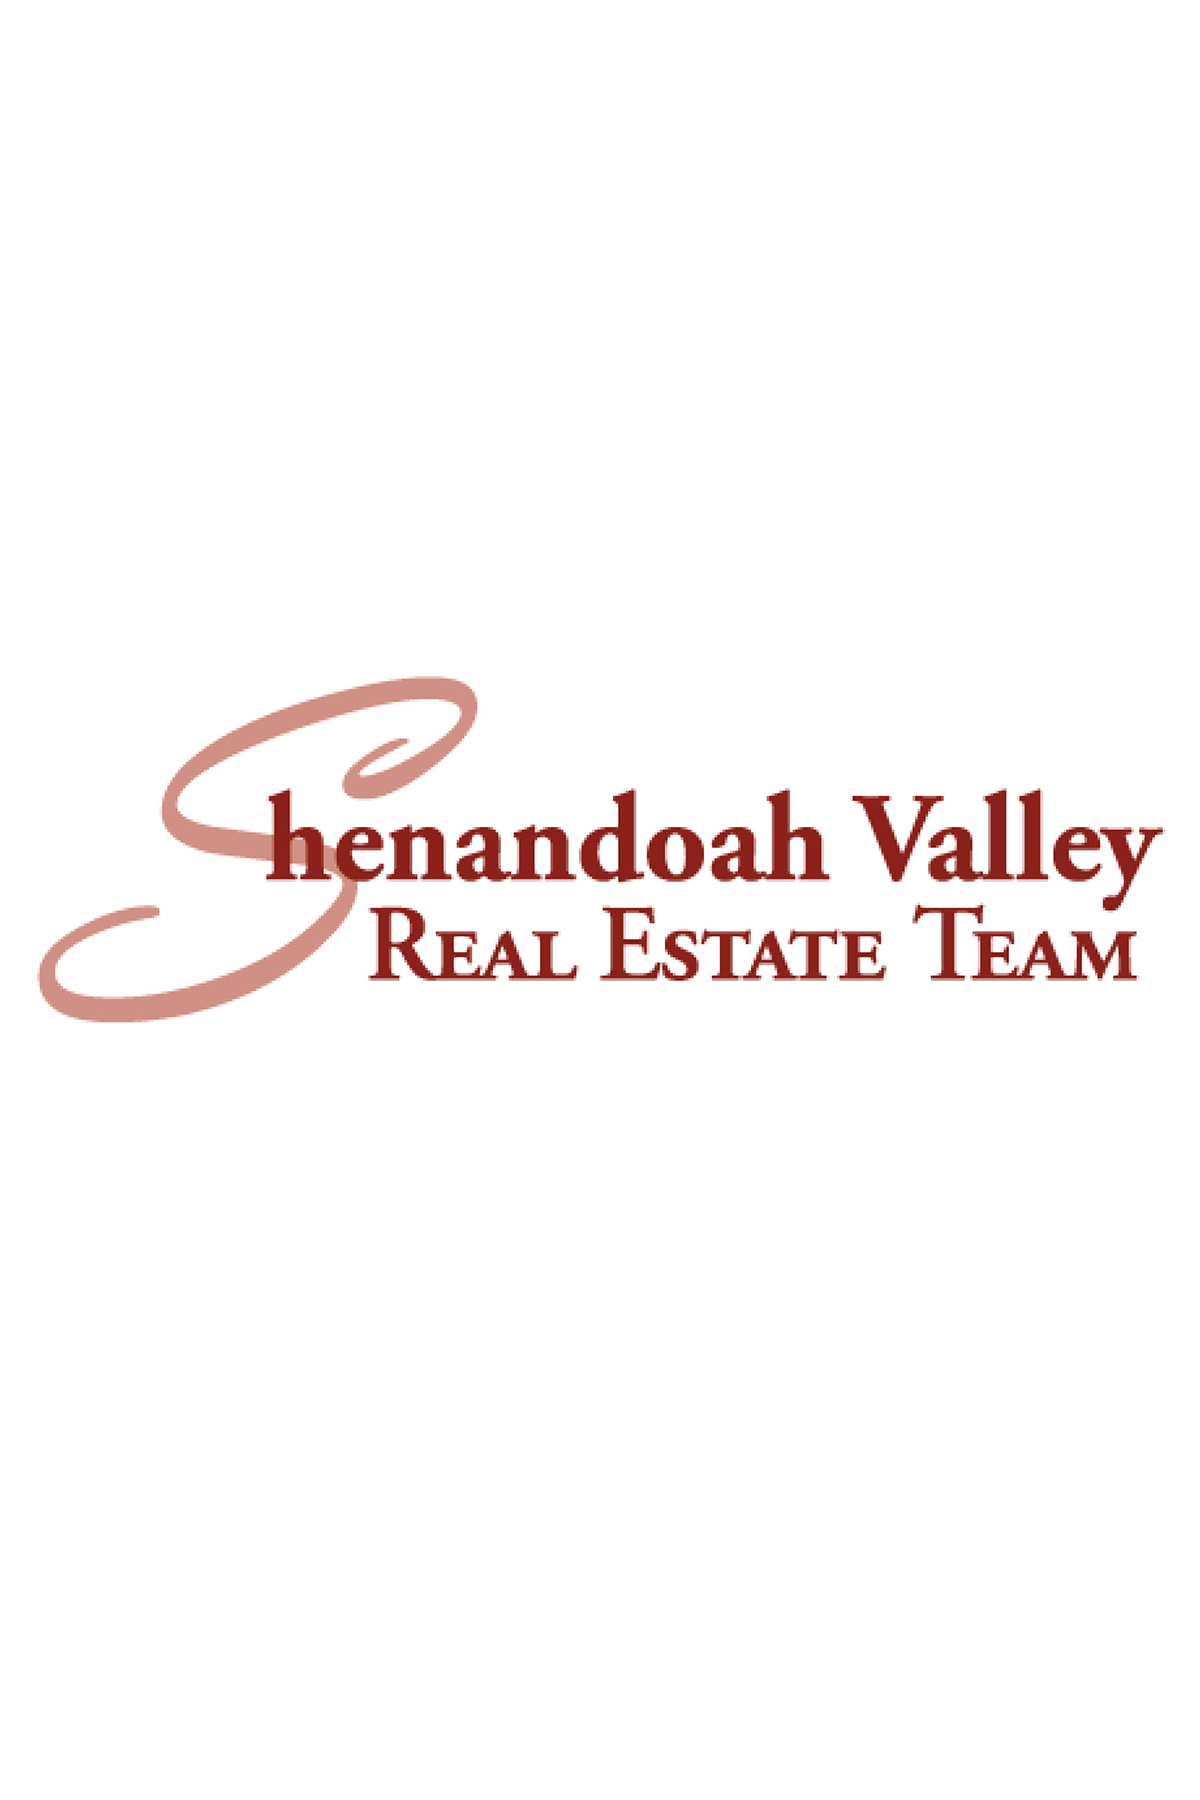 Shenandoah Valley Real Estate Team,  in Harrisonburg, Kline May Realty